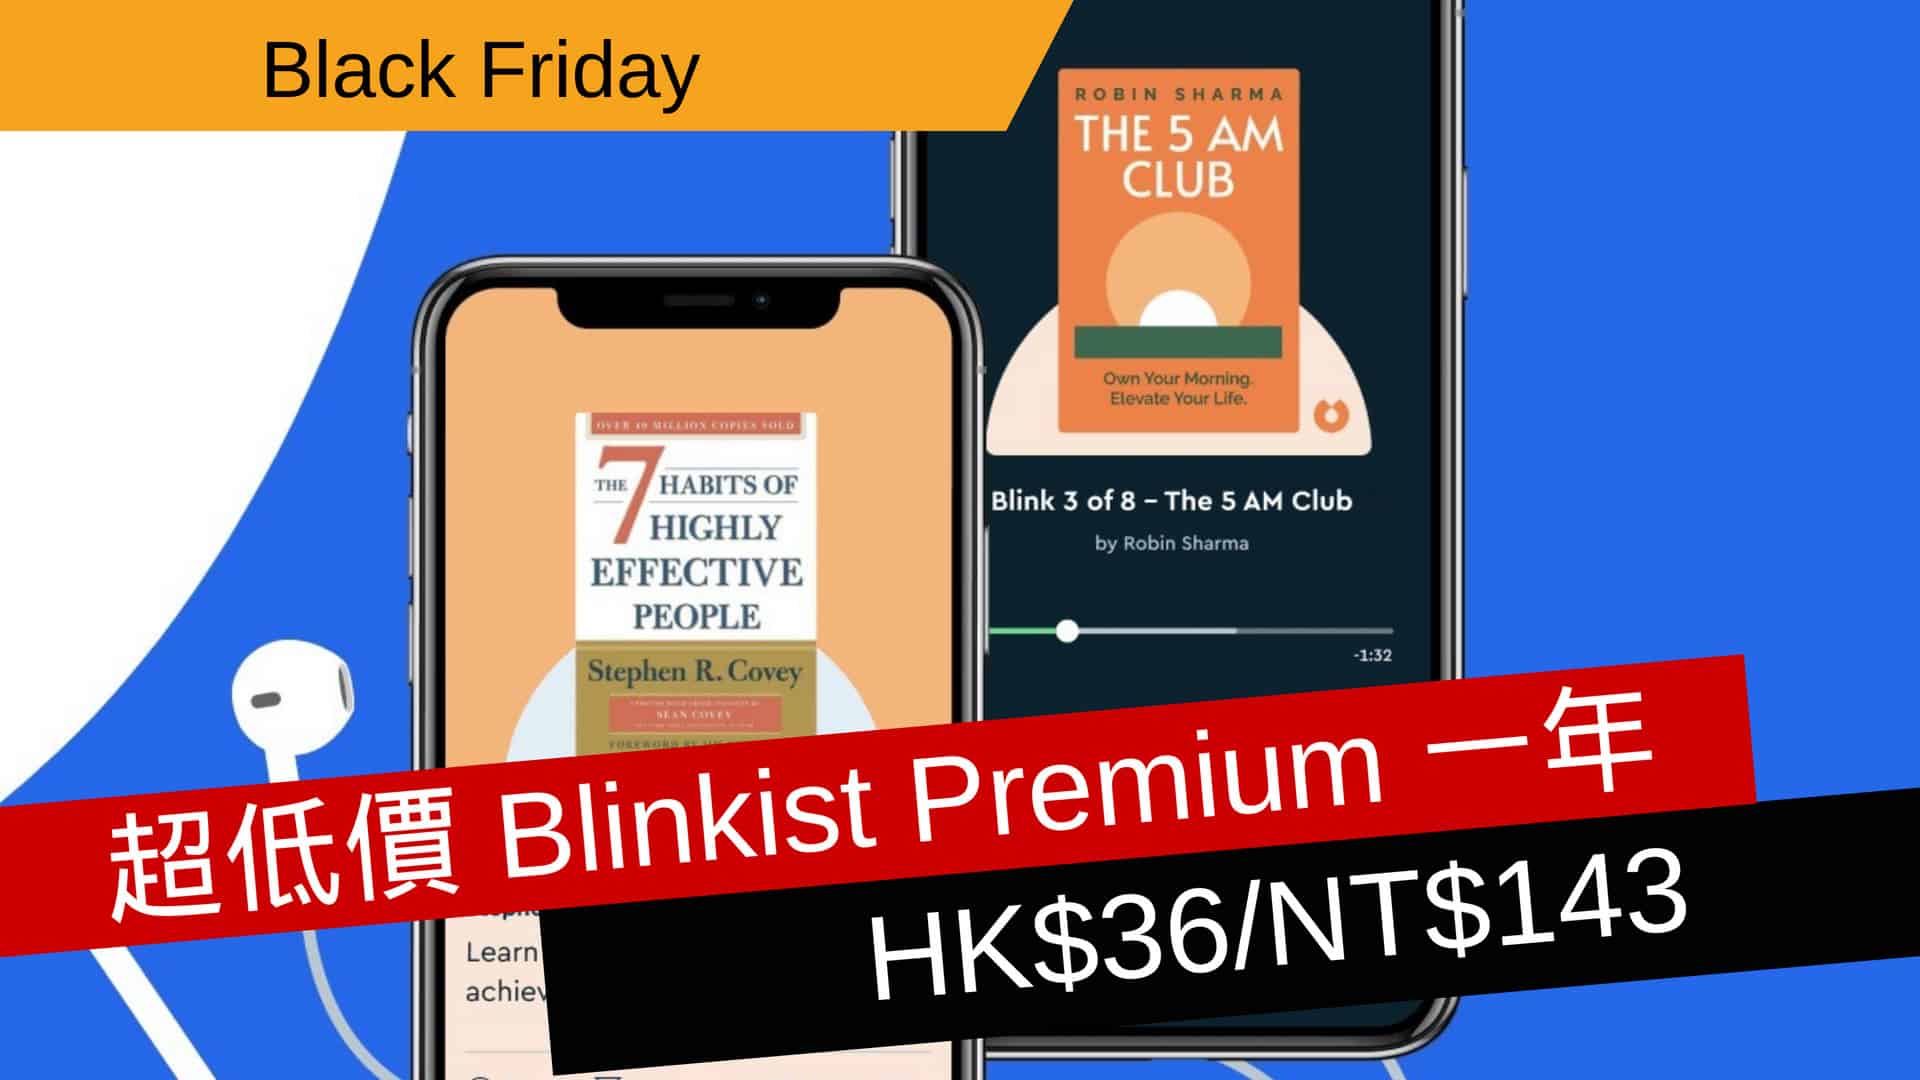 【Black Friday】Blinkist Premium 一年限時特價 HK36/NT143 流動日報